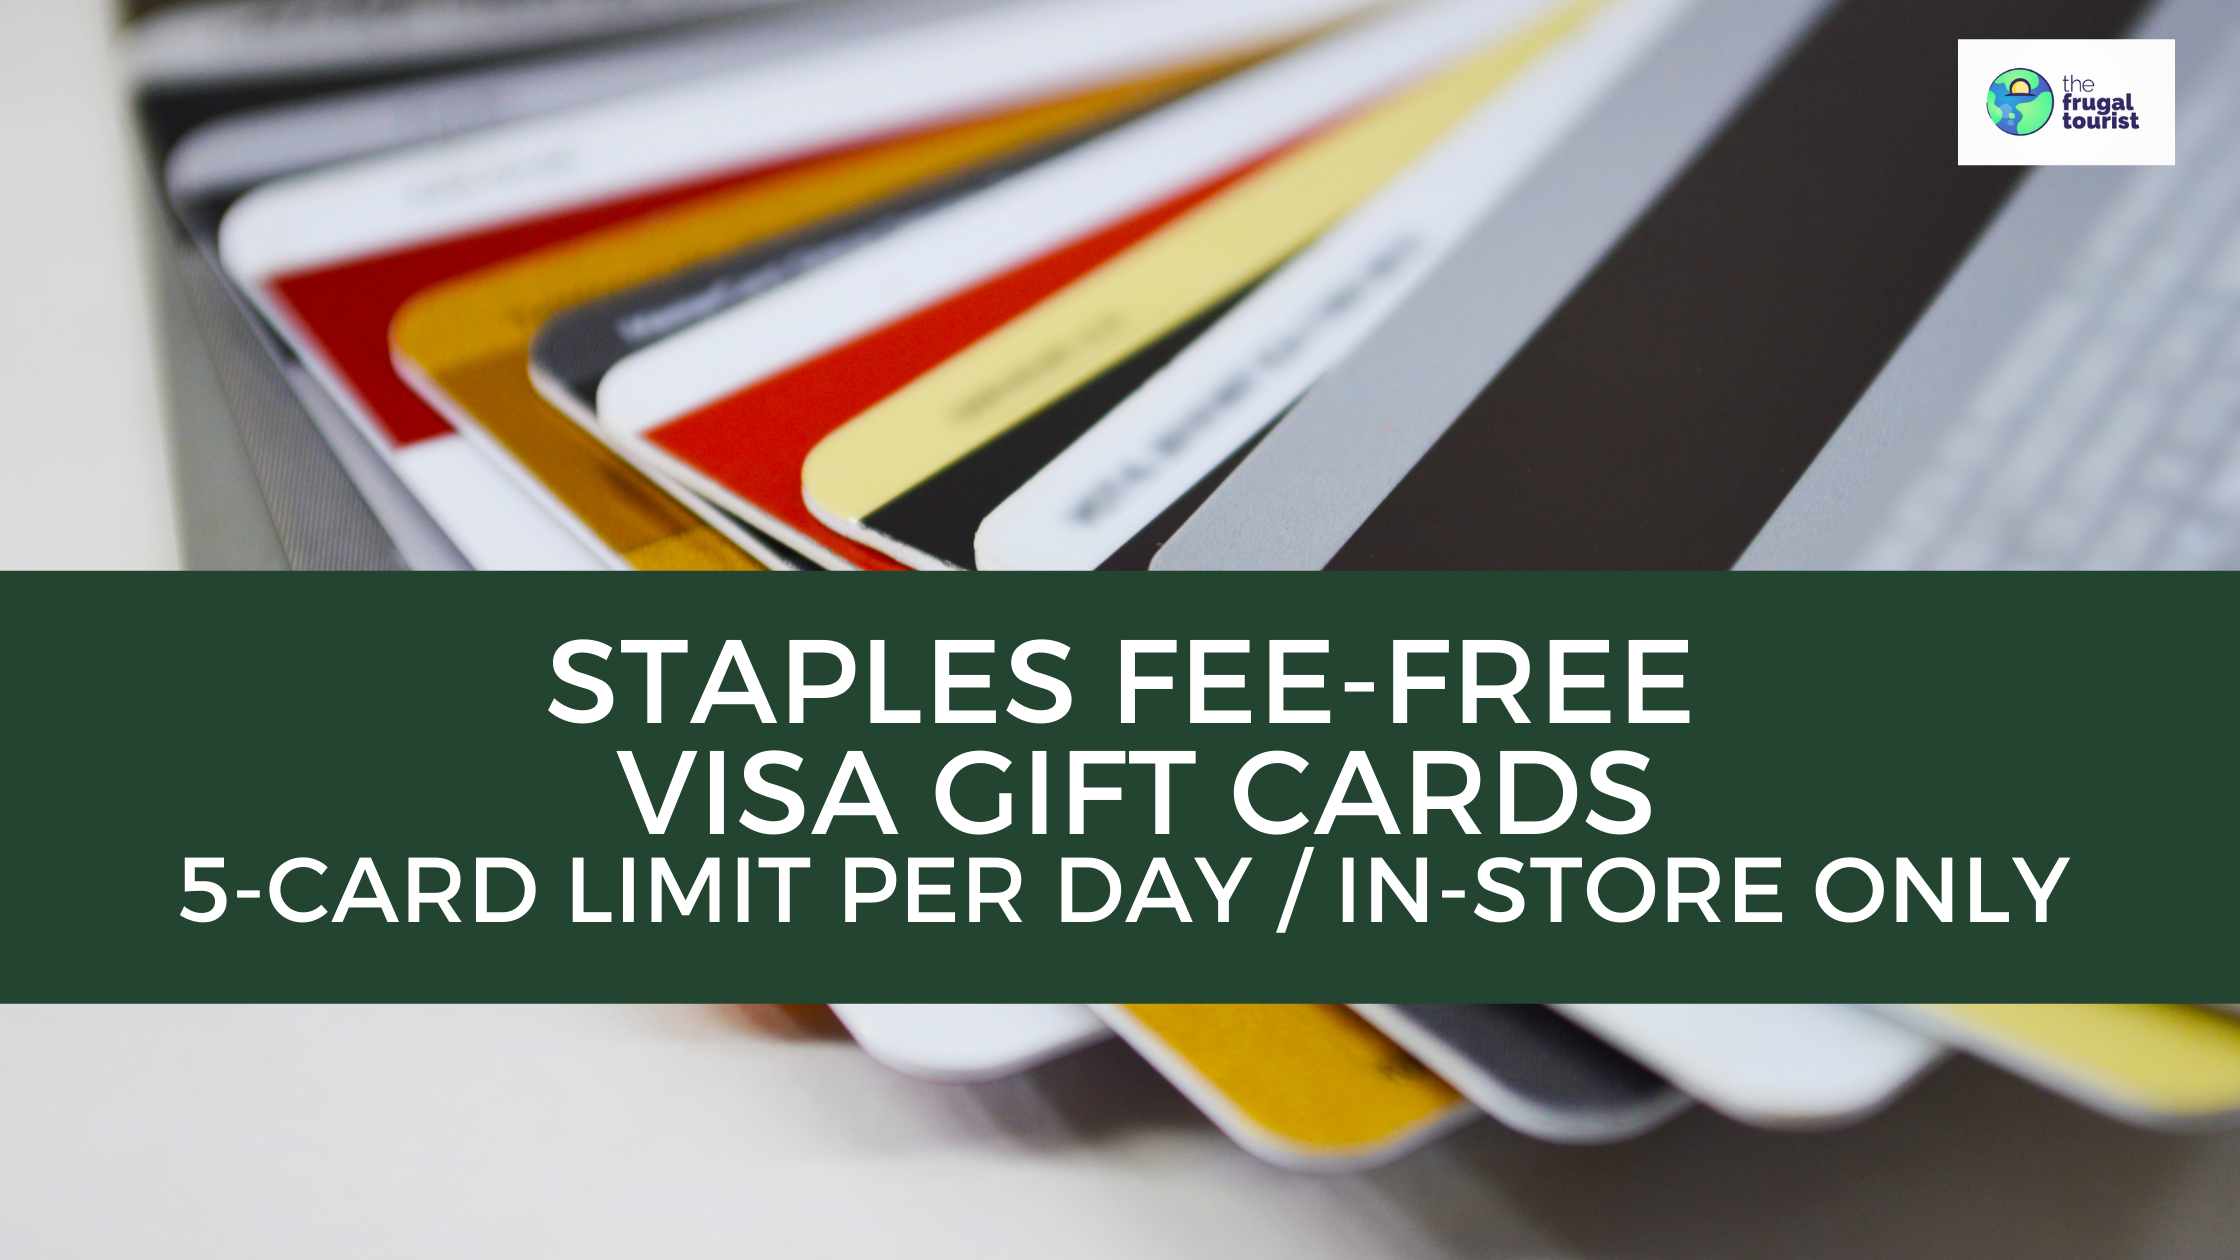 Staples Fee-Free Visa Gift Cards 2/27-3/5